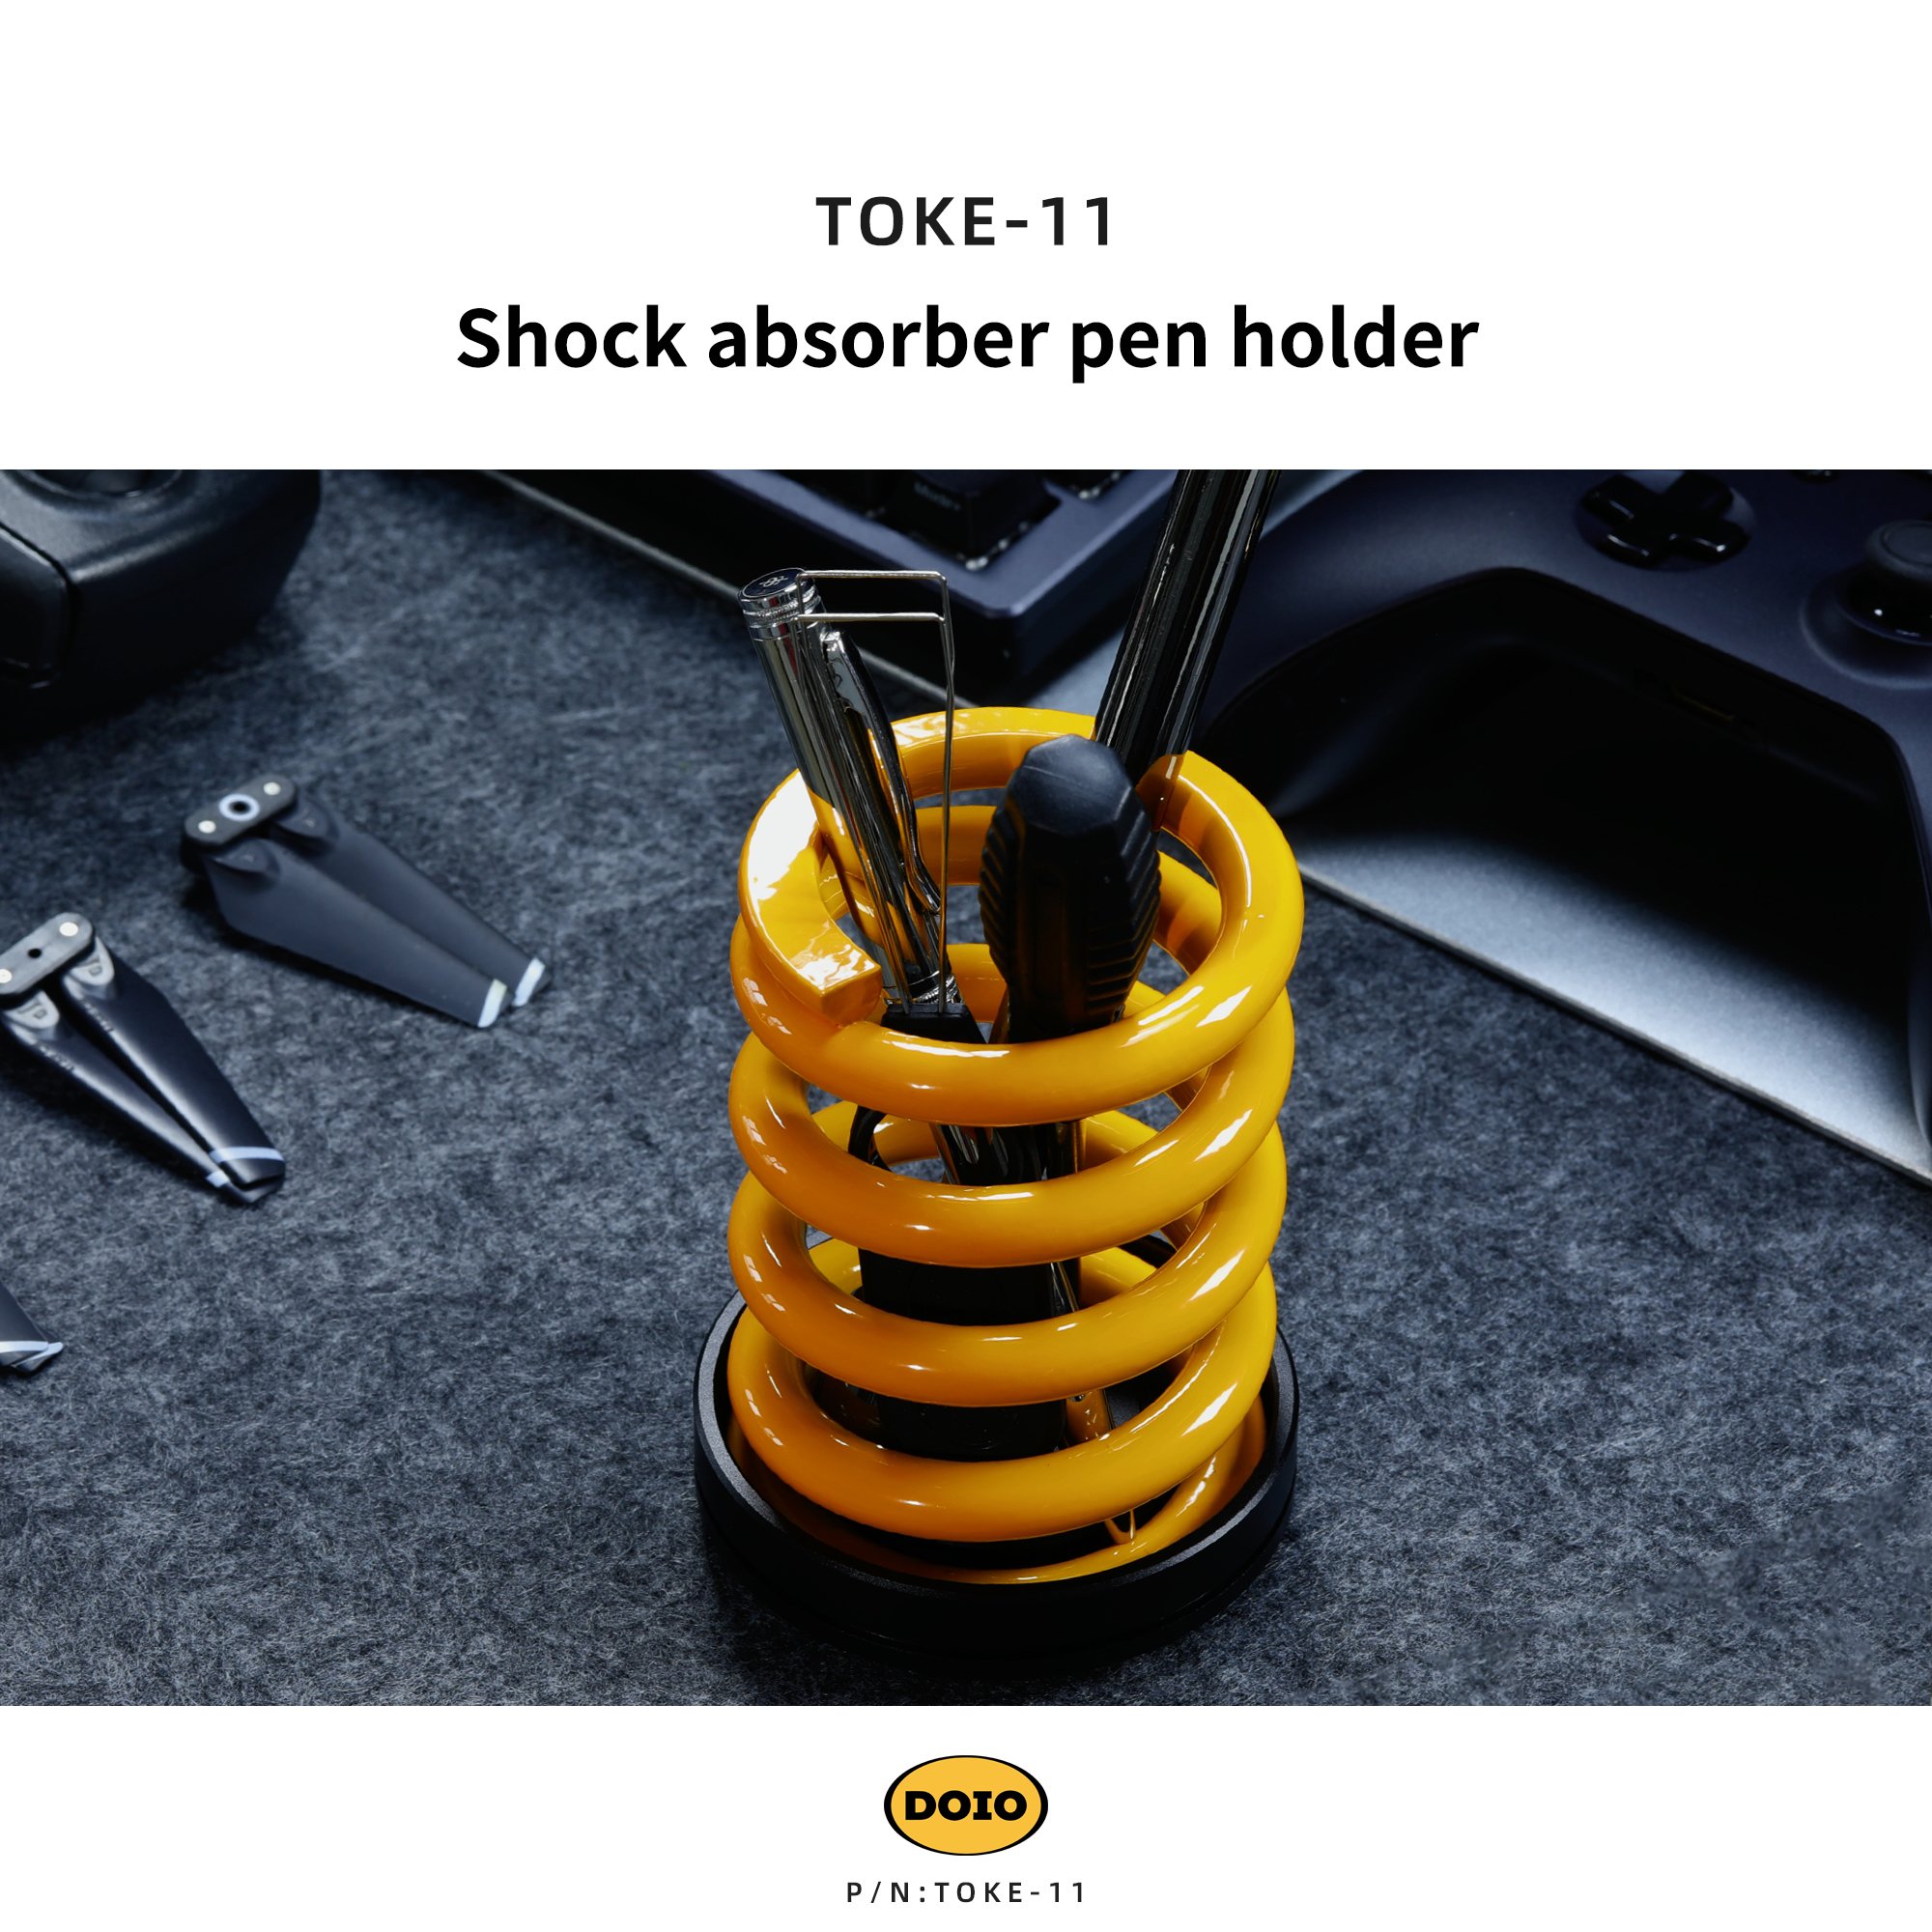 Shock absorber pen holder